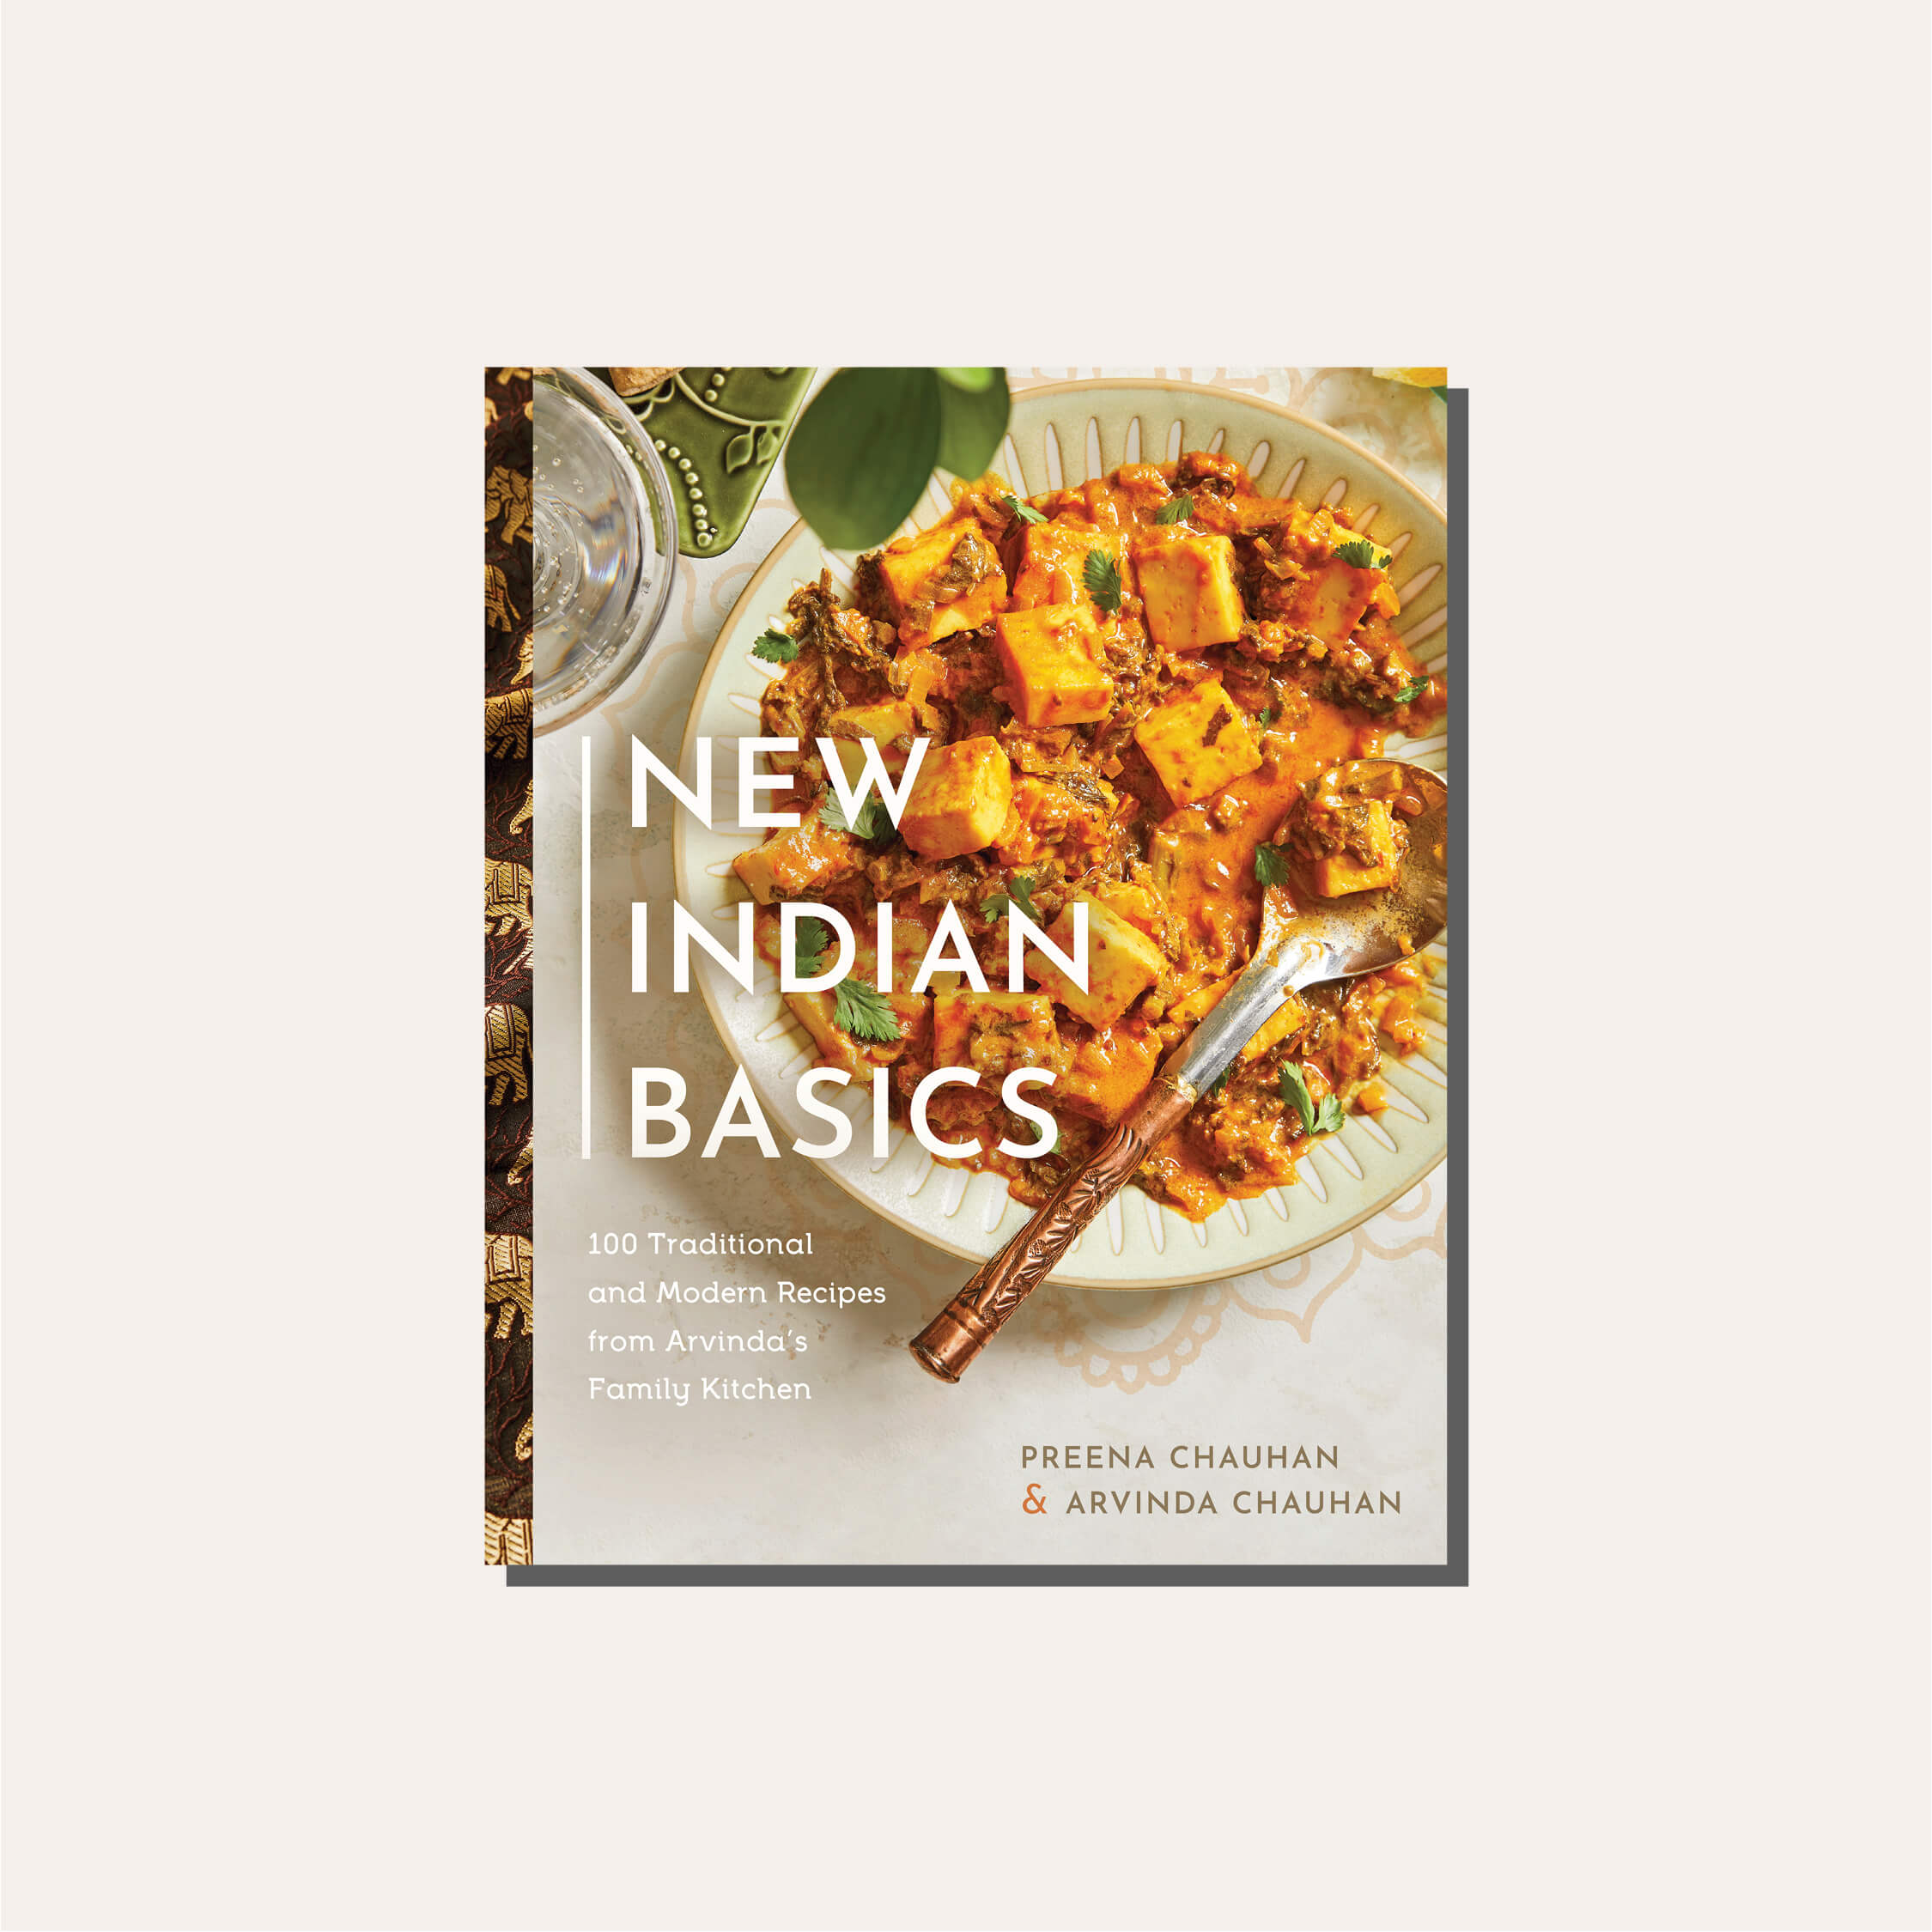 A cookbook cover in a light frame